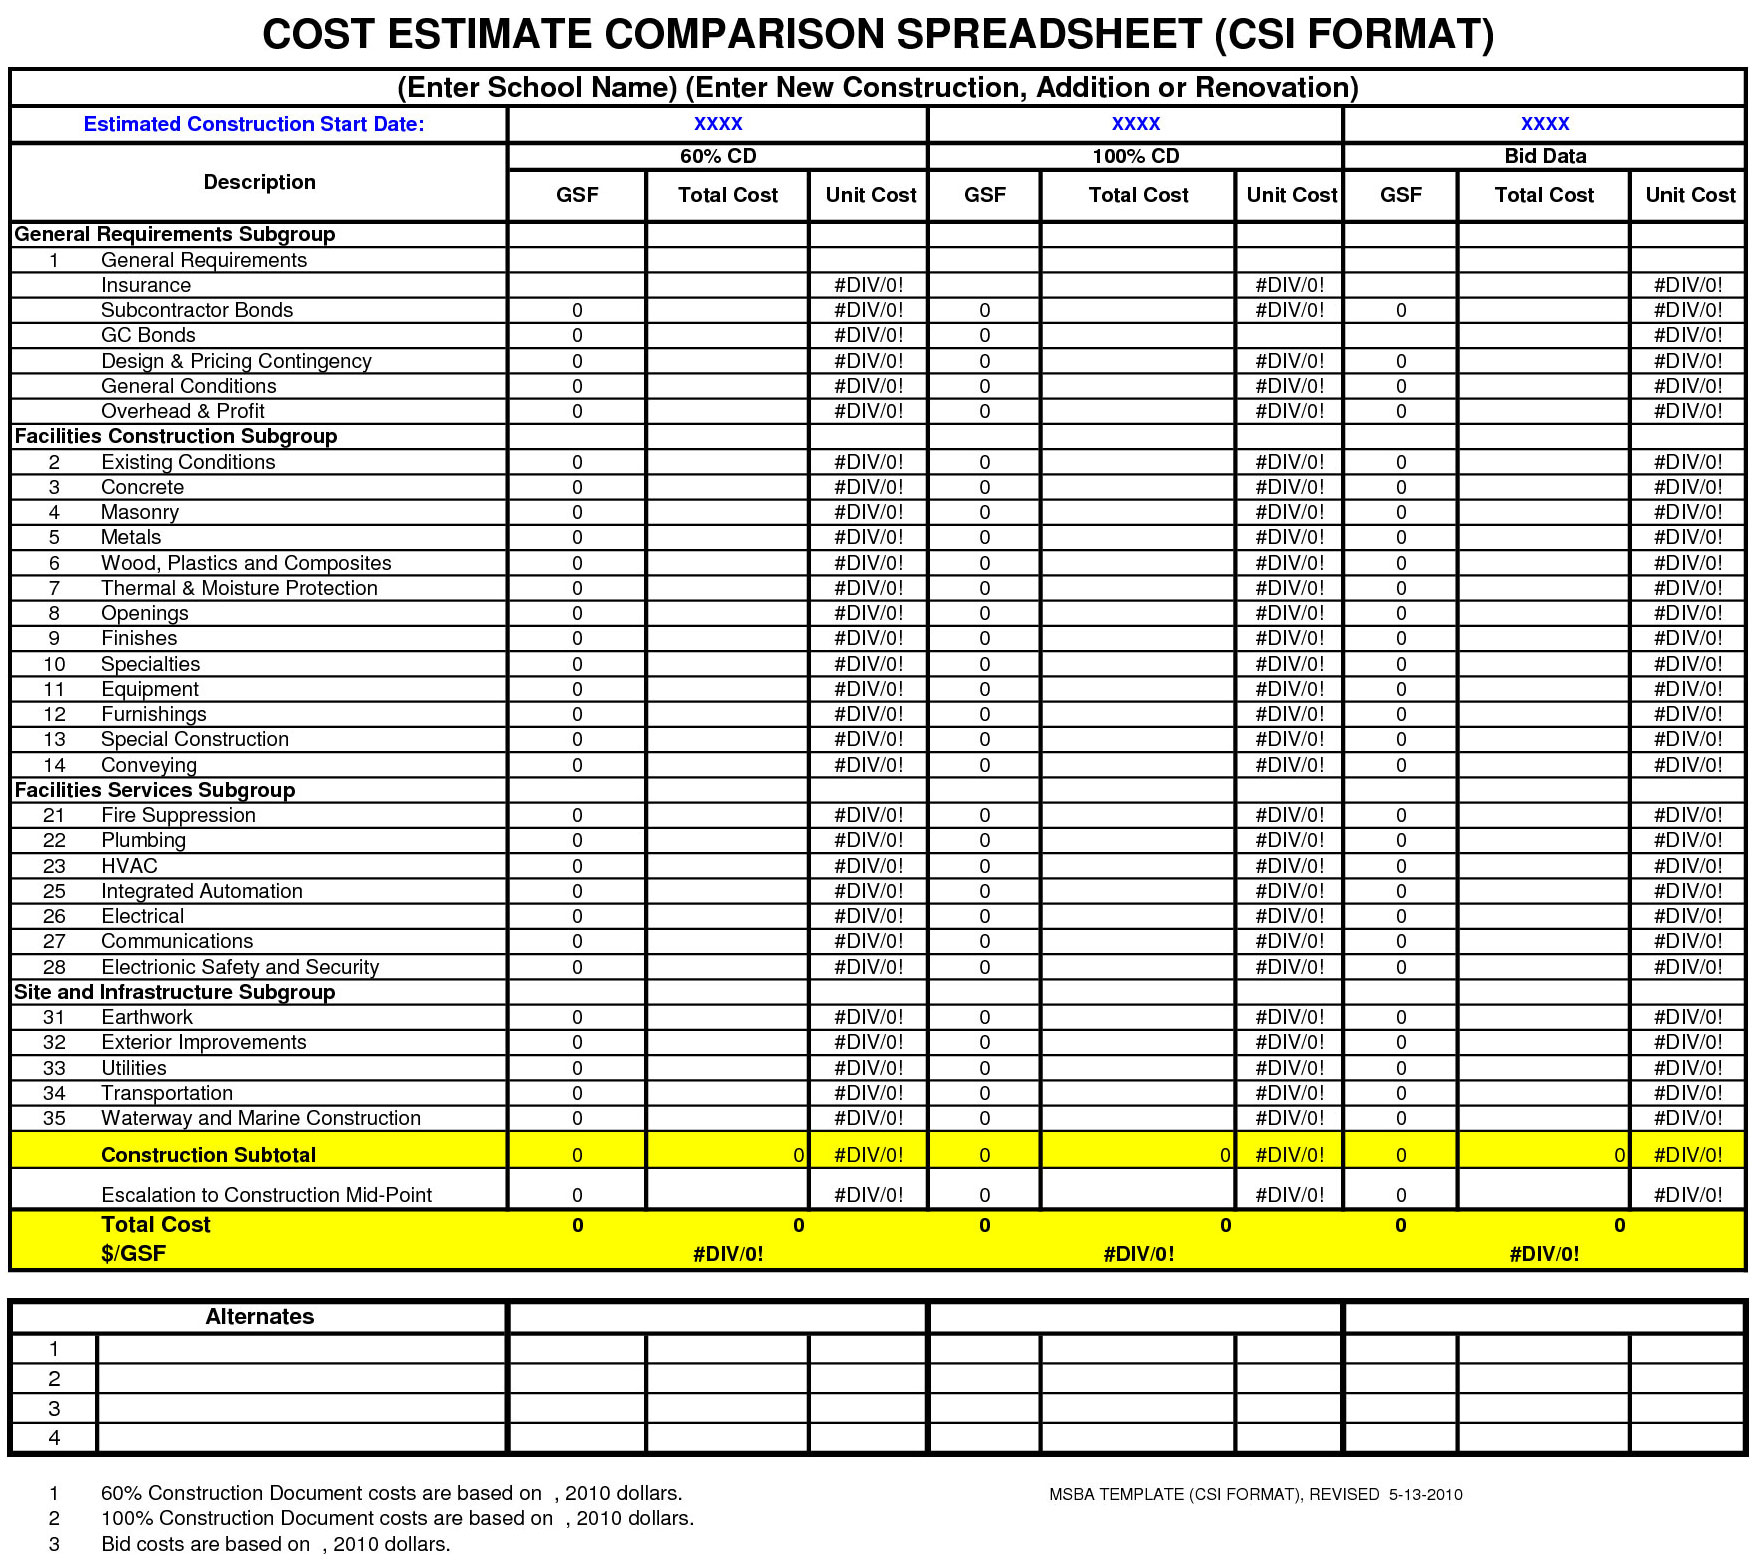 Software Comparison Spreadsheet Template With Cost Estimate Comparison Spreadsheet  Free Download Cost Estimator